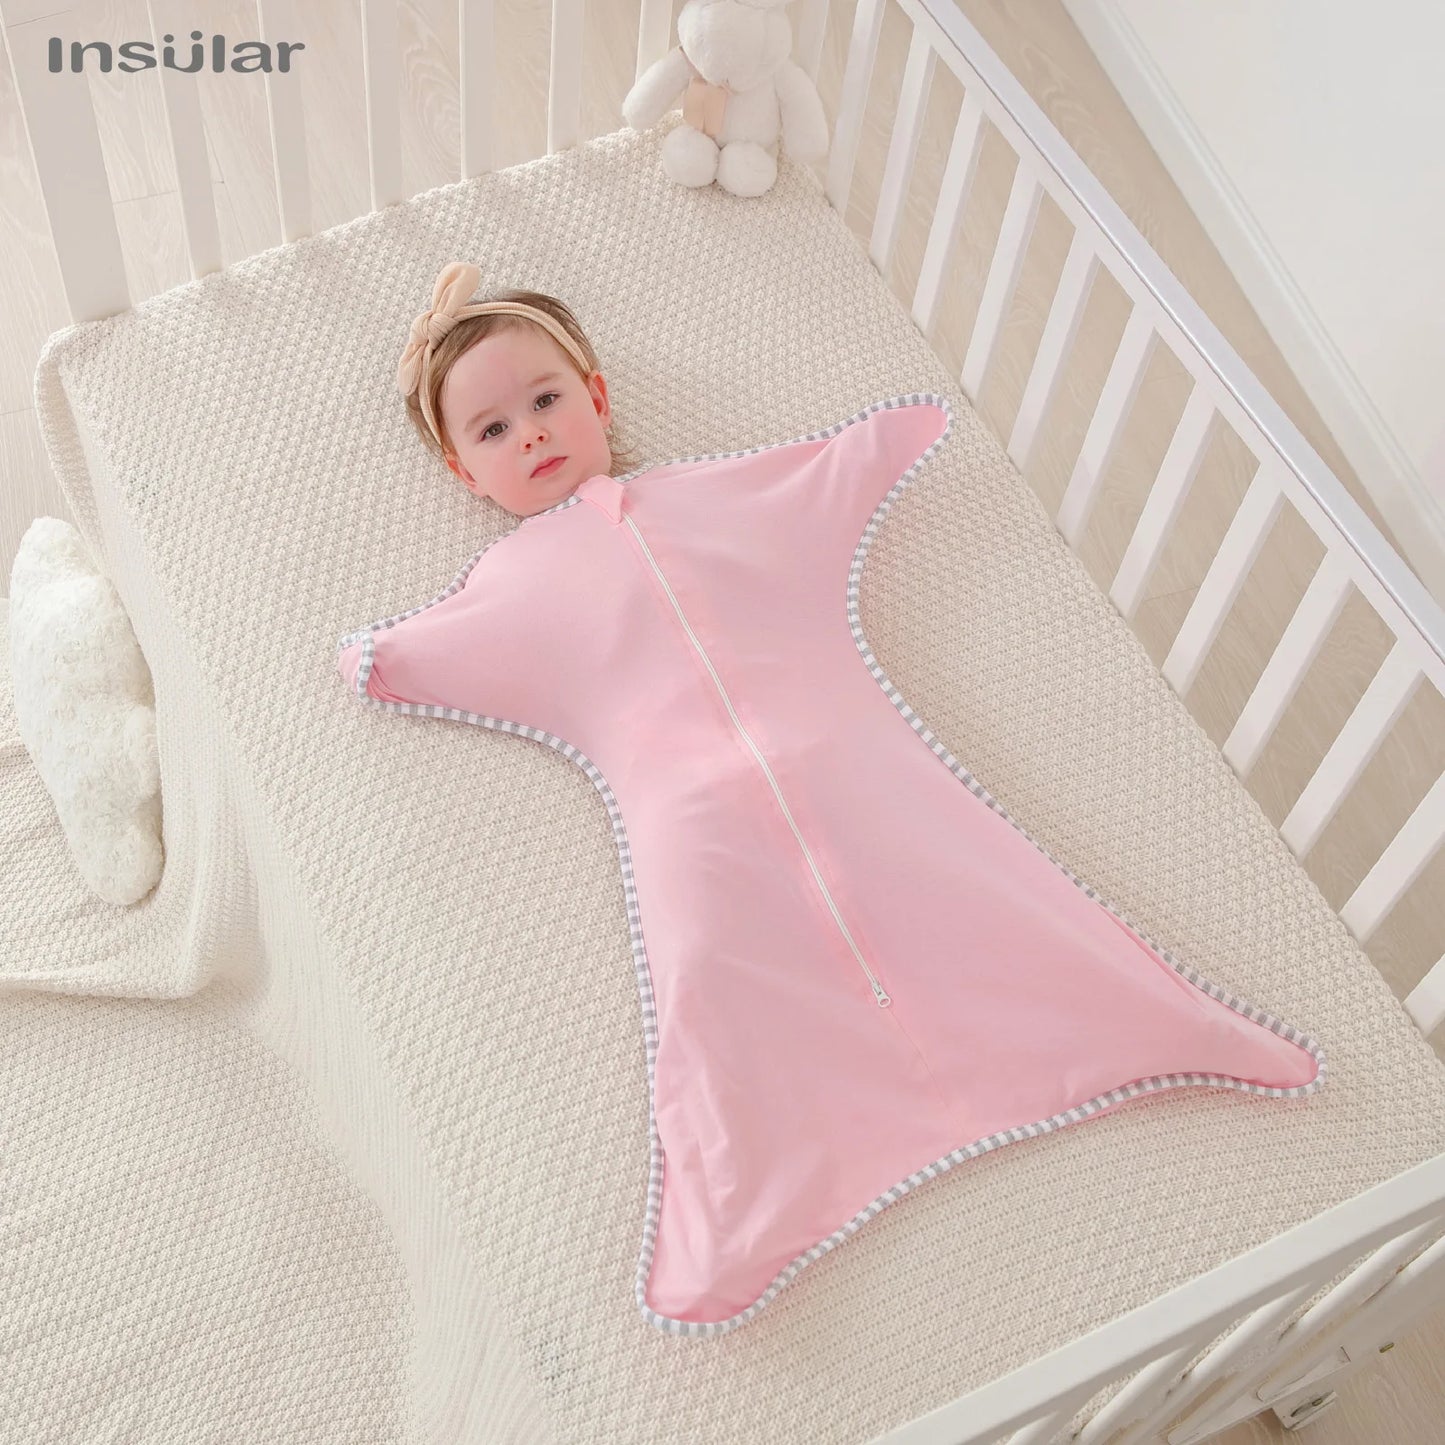 Anti-Startle Sleepsuit For Babies PillowNap